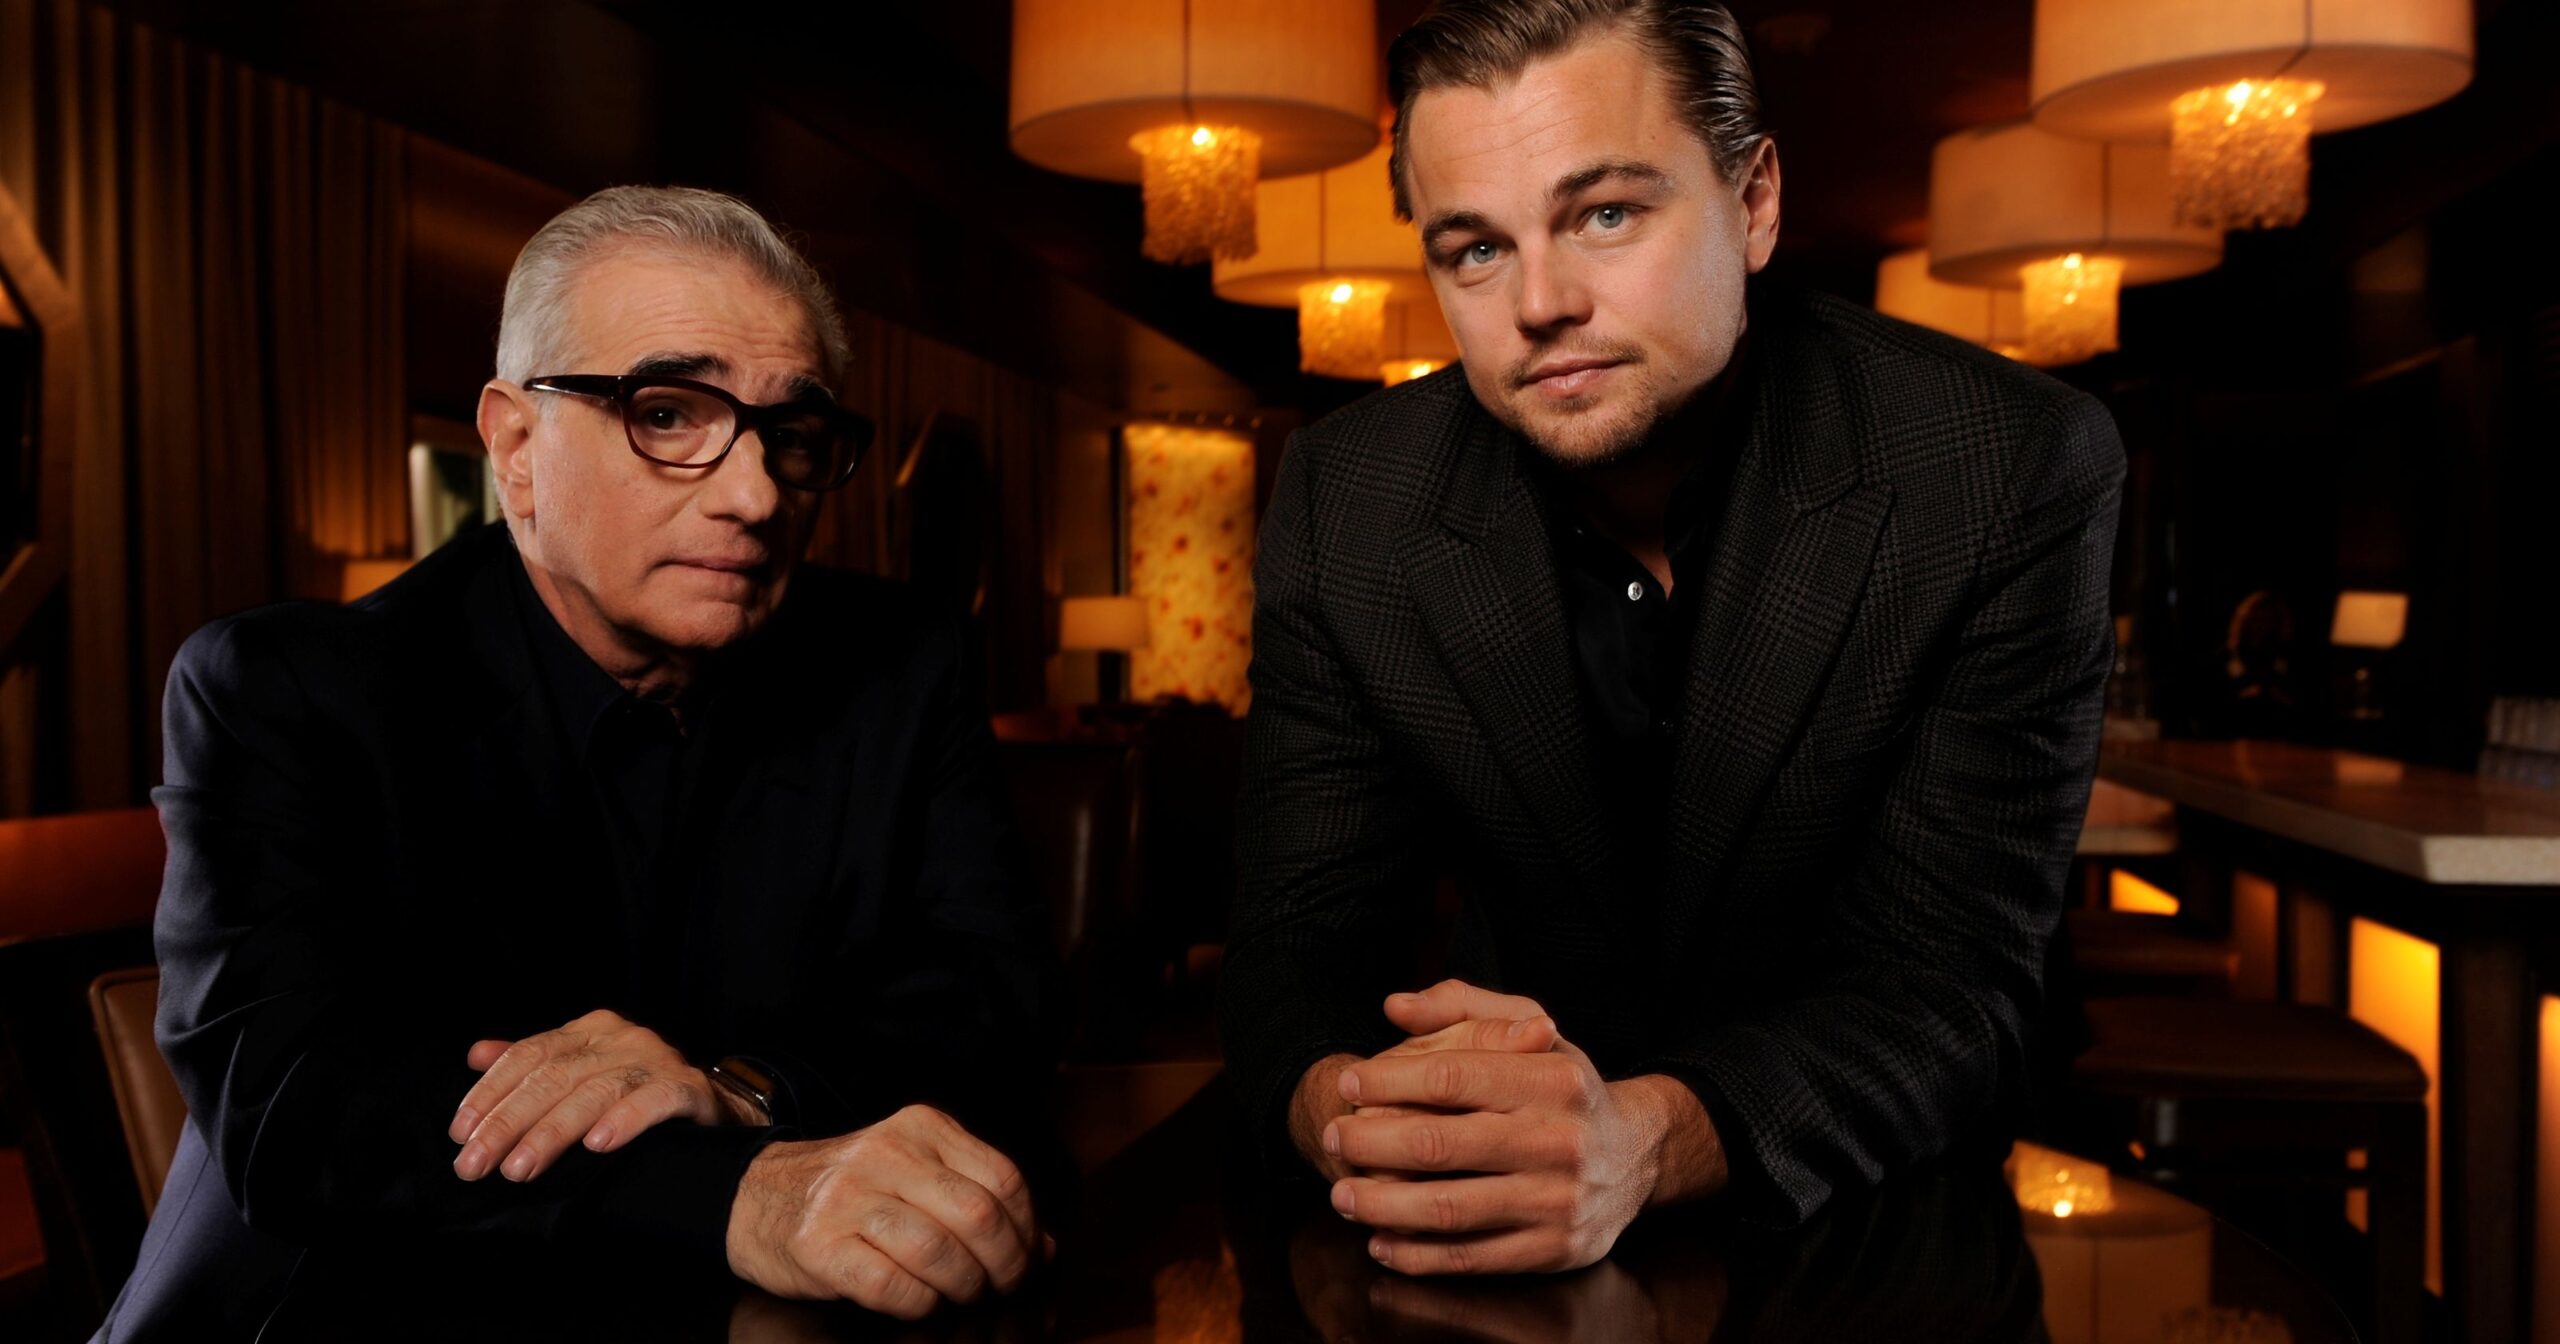 Scorsese e DiCaprio confirmados em “Killers of the Flower Moon”